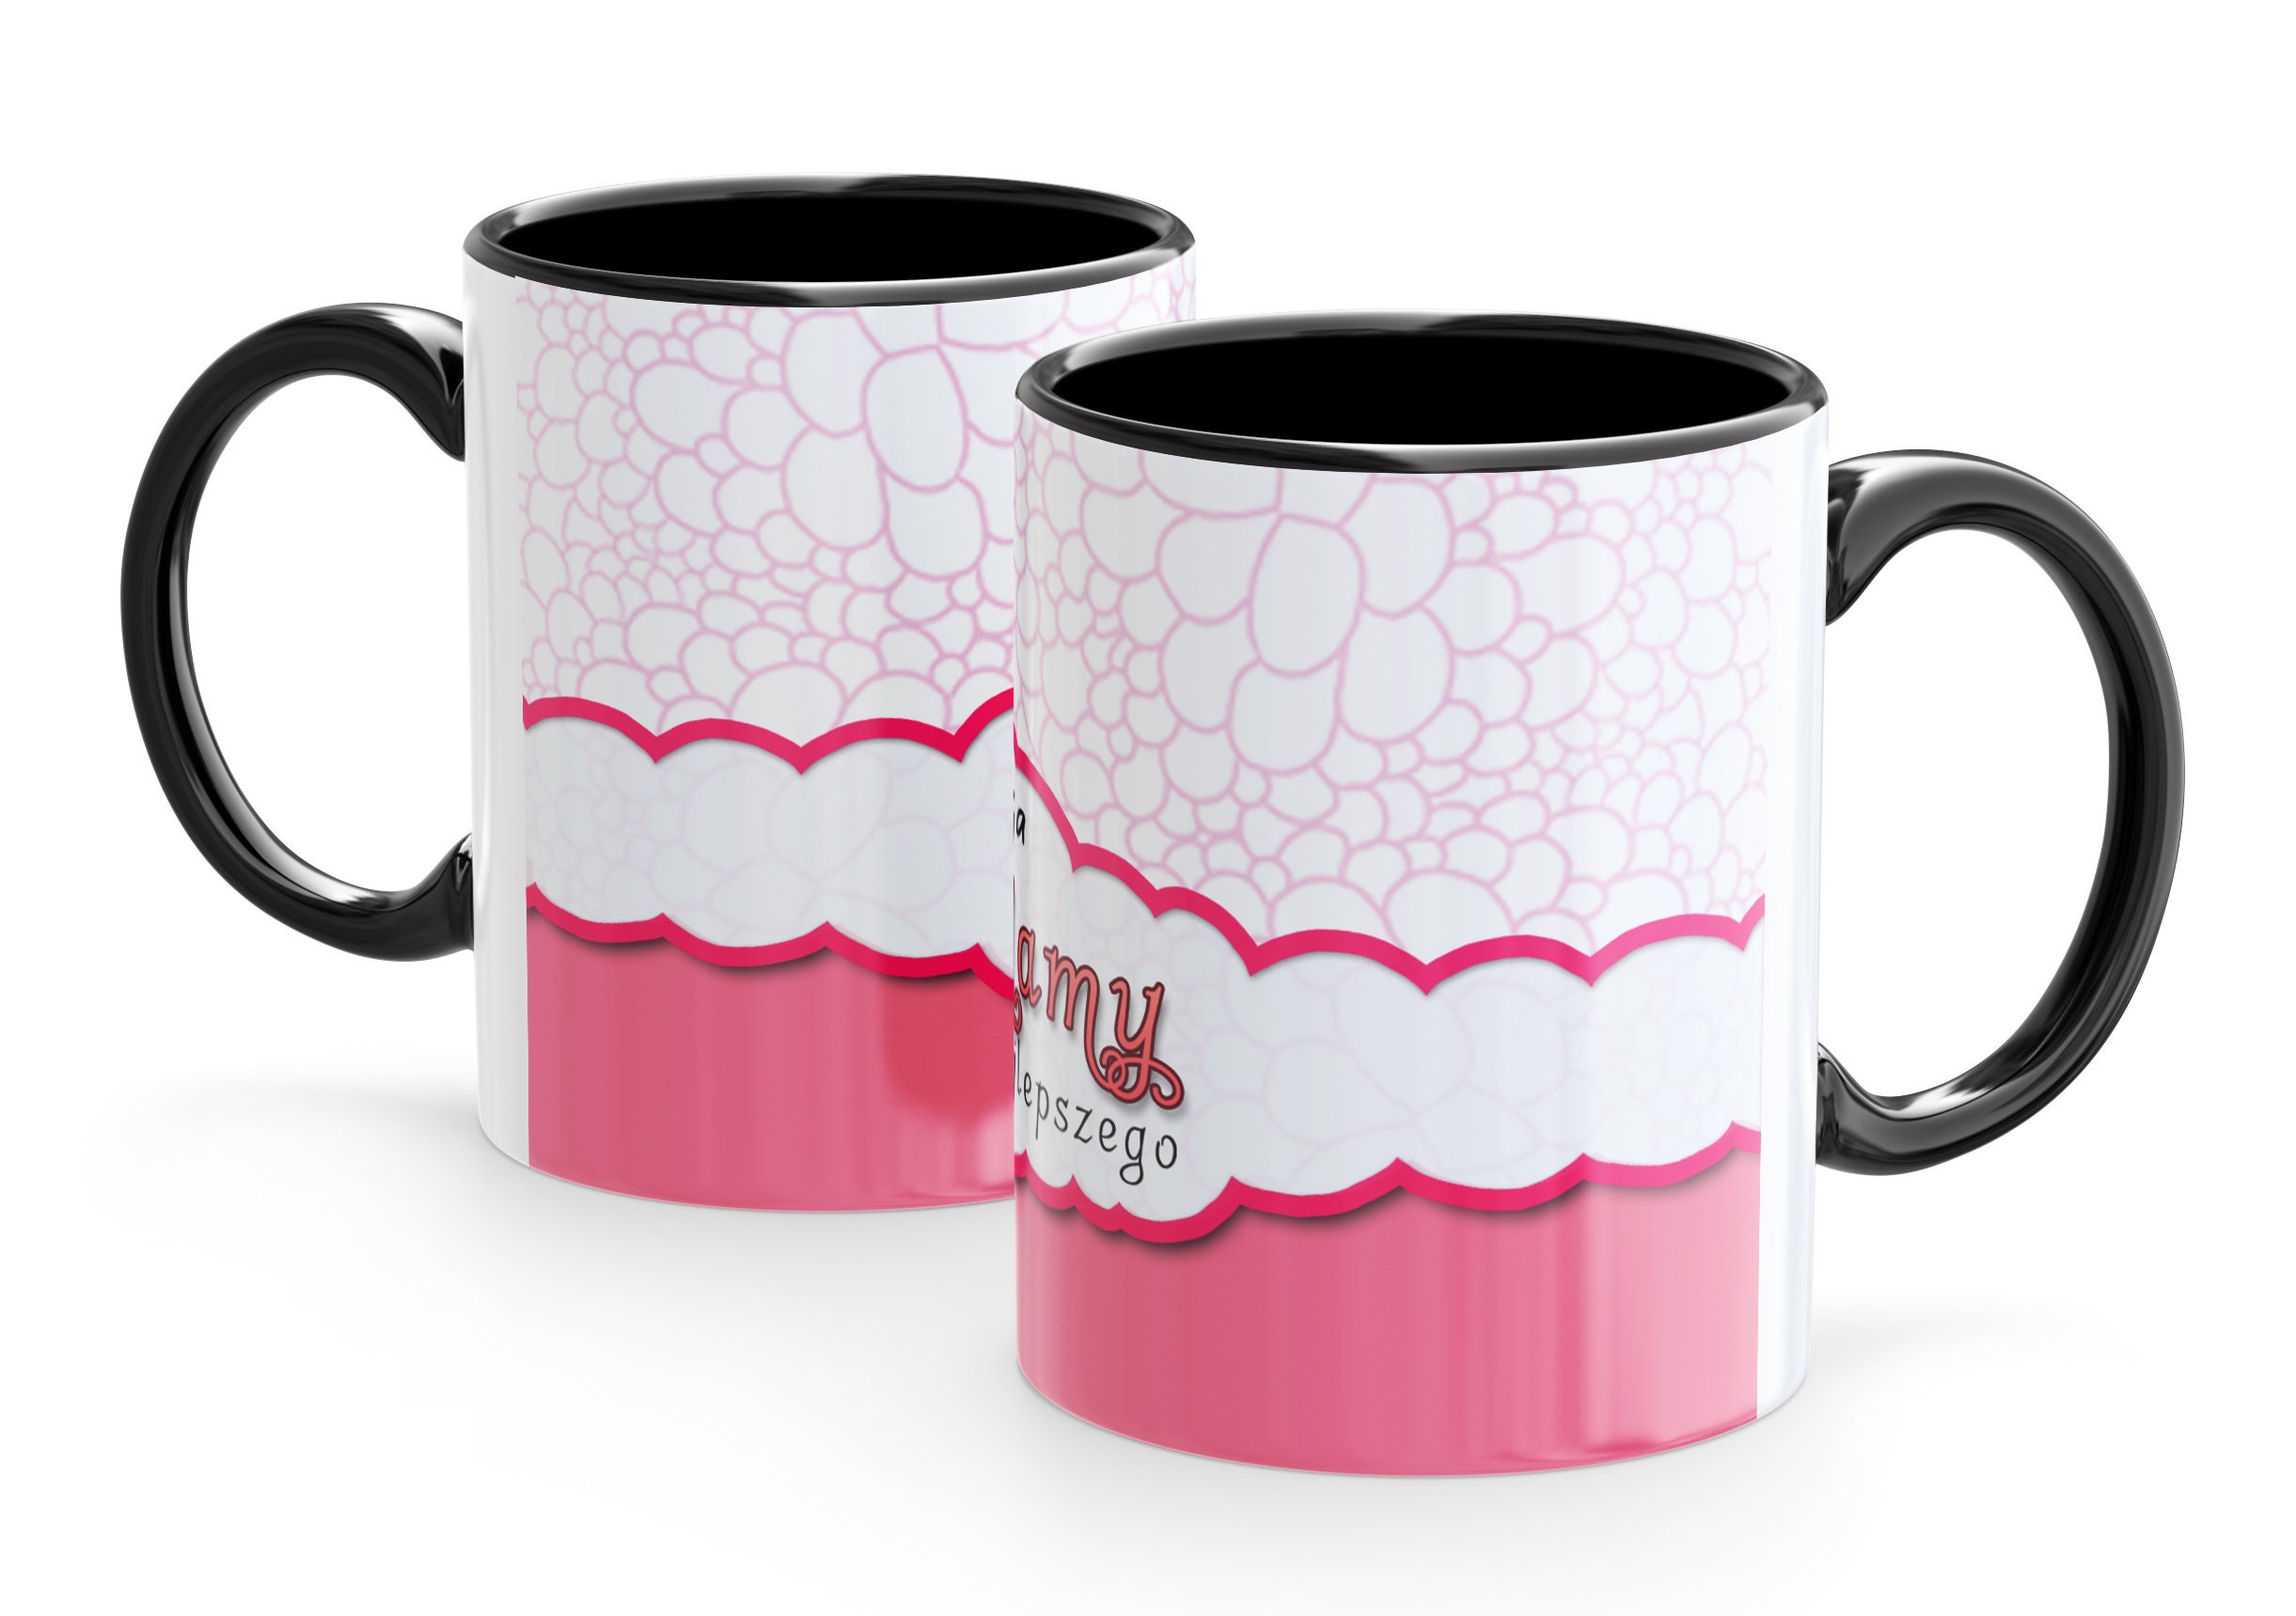 5. Coffee Mug Design with Nail Polish Flowers - wide 2